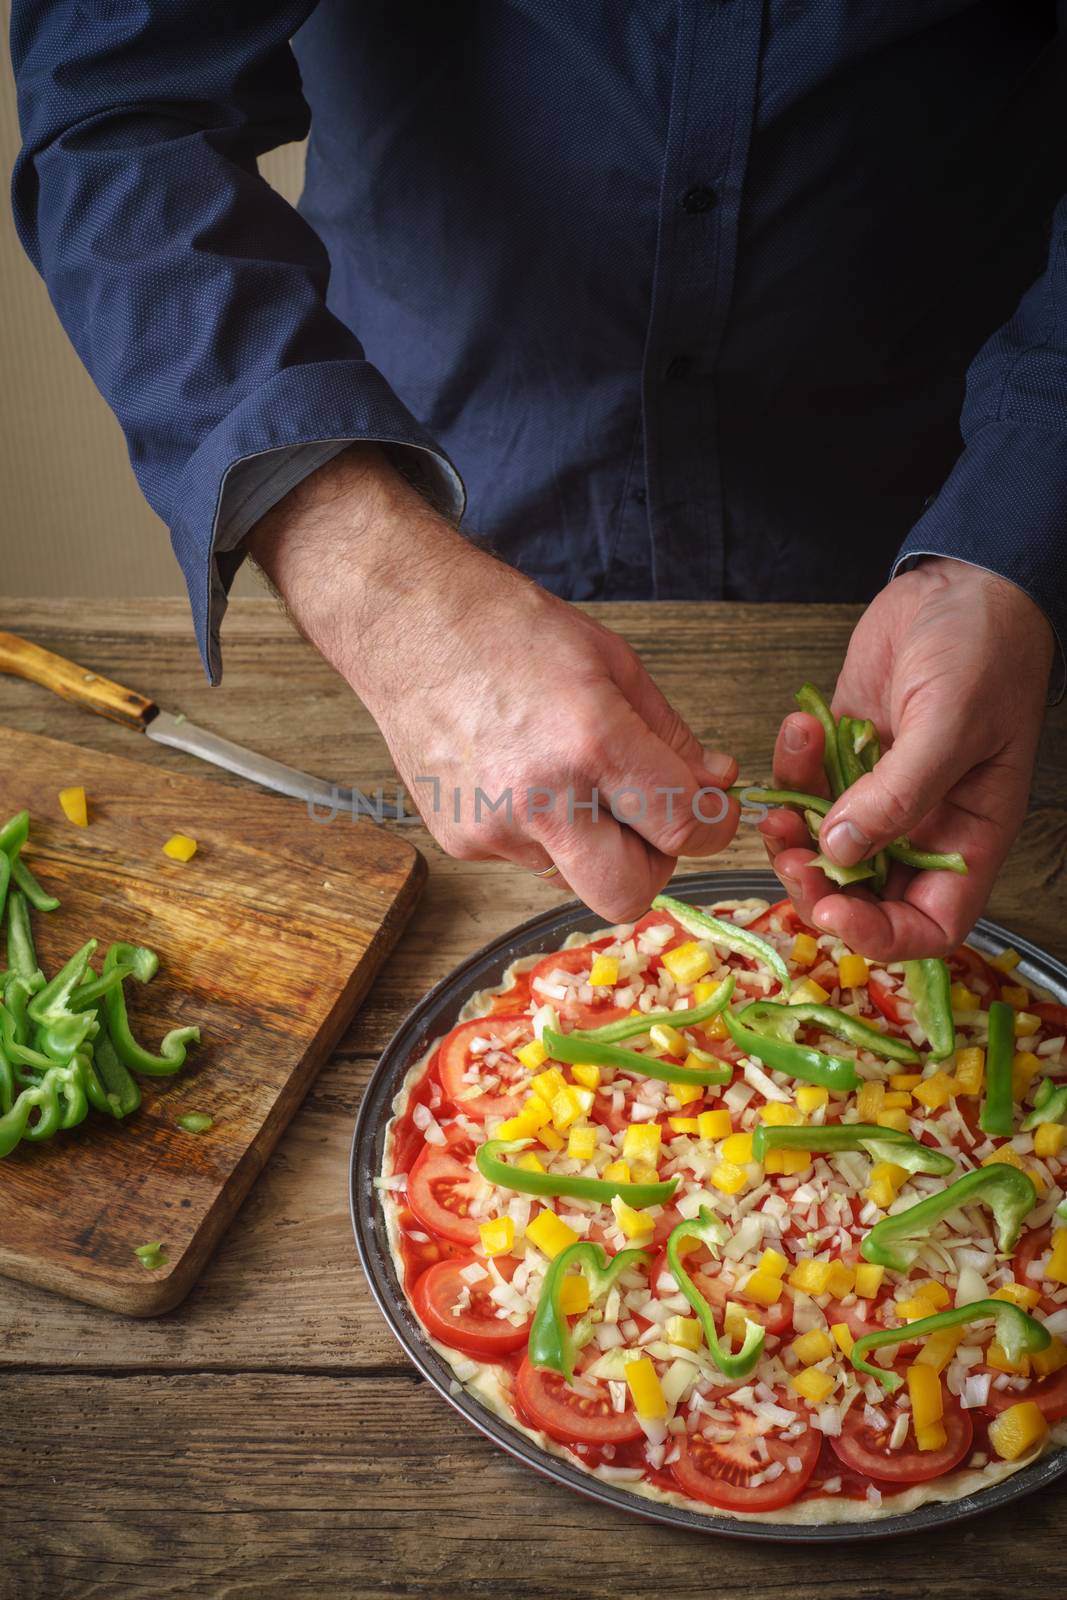 Man makes homemade pizza on the table by Deniskarpenkov